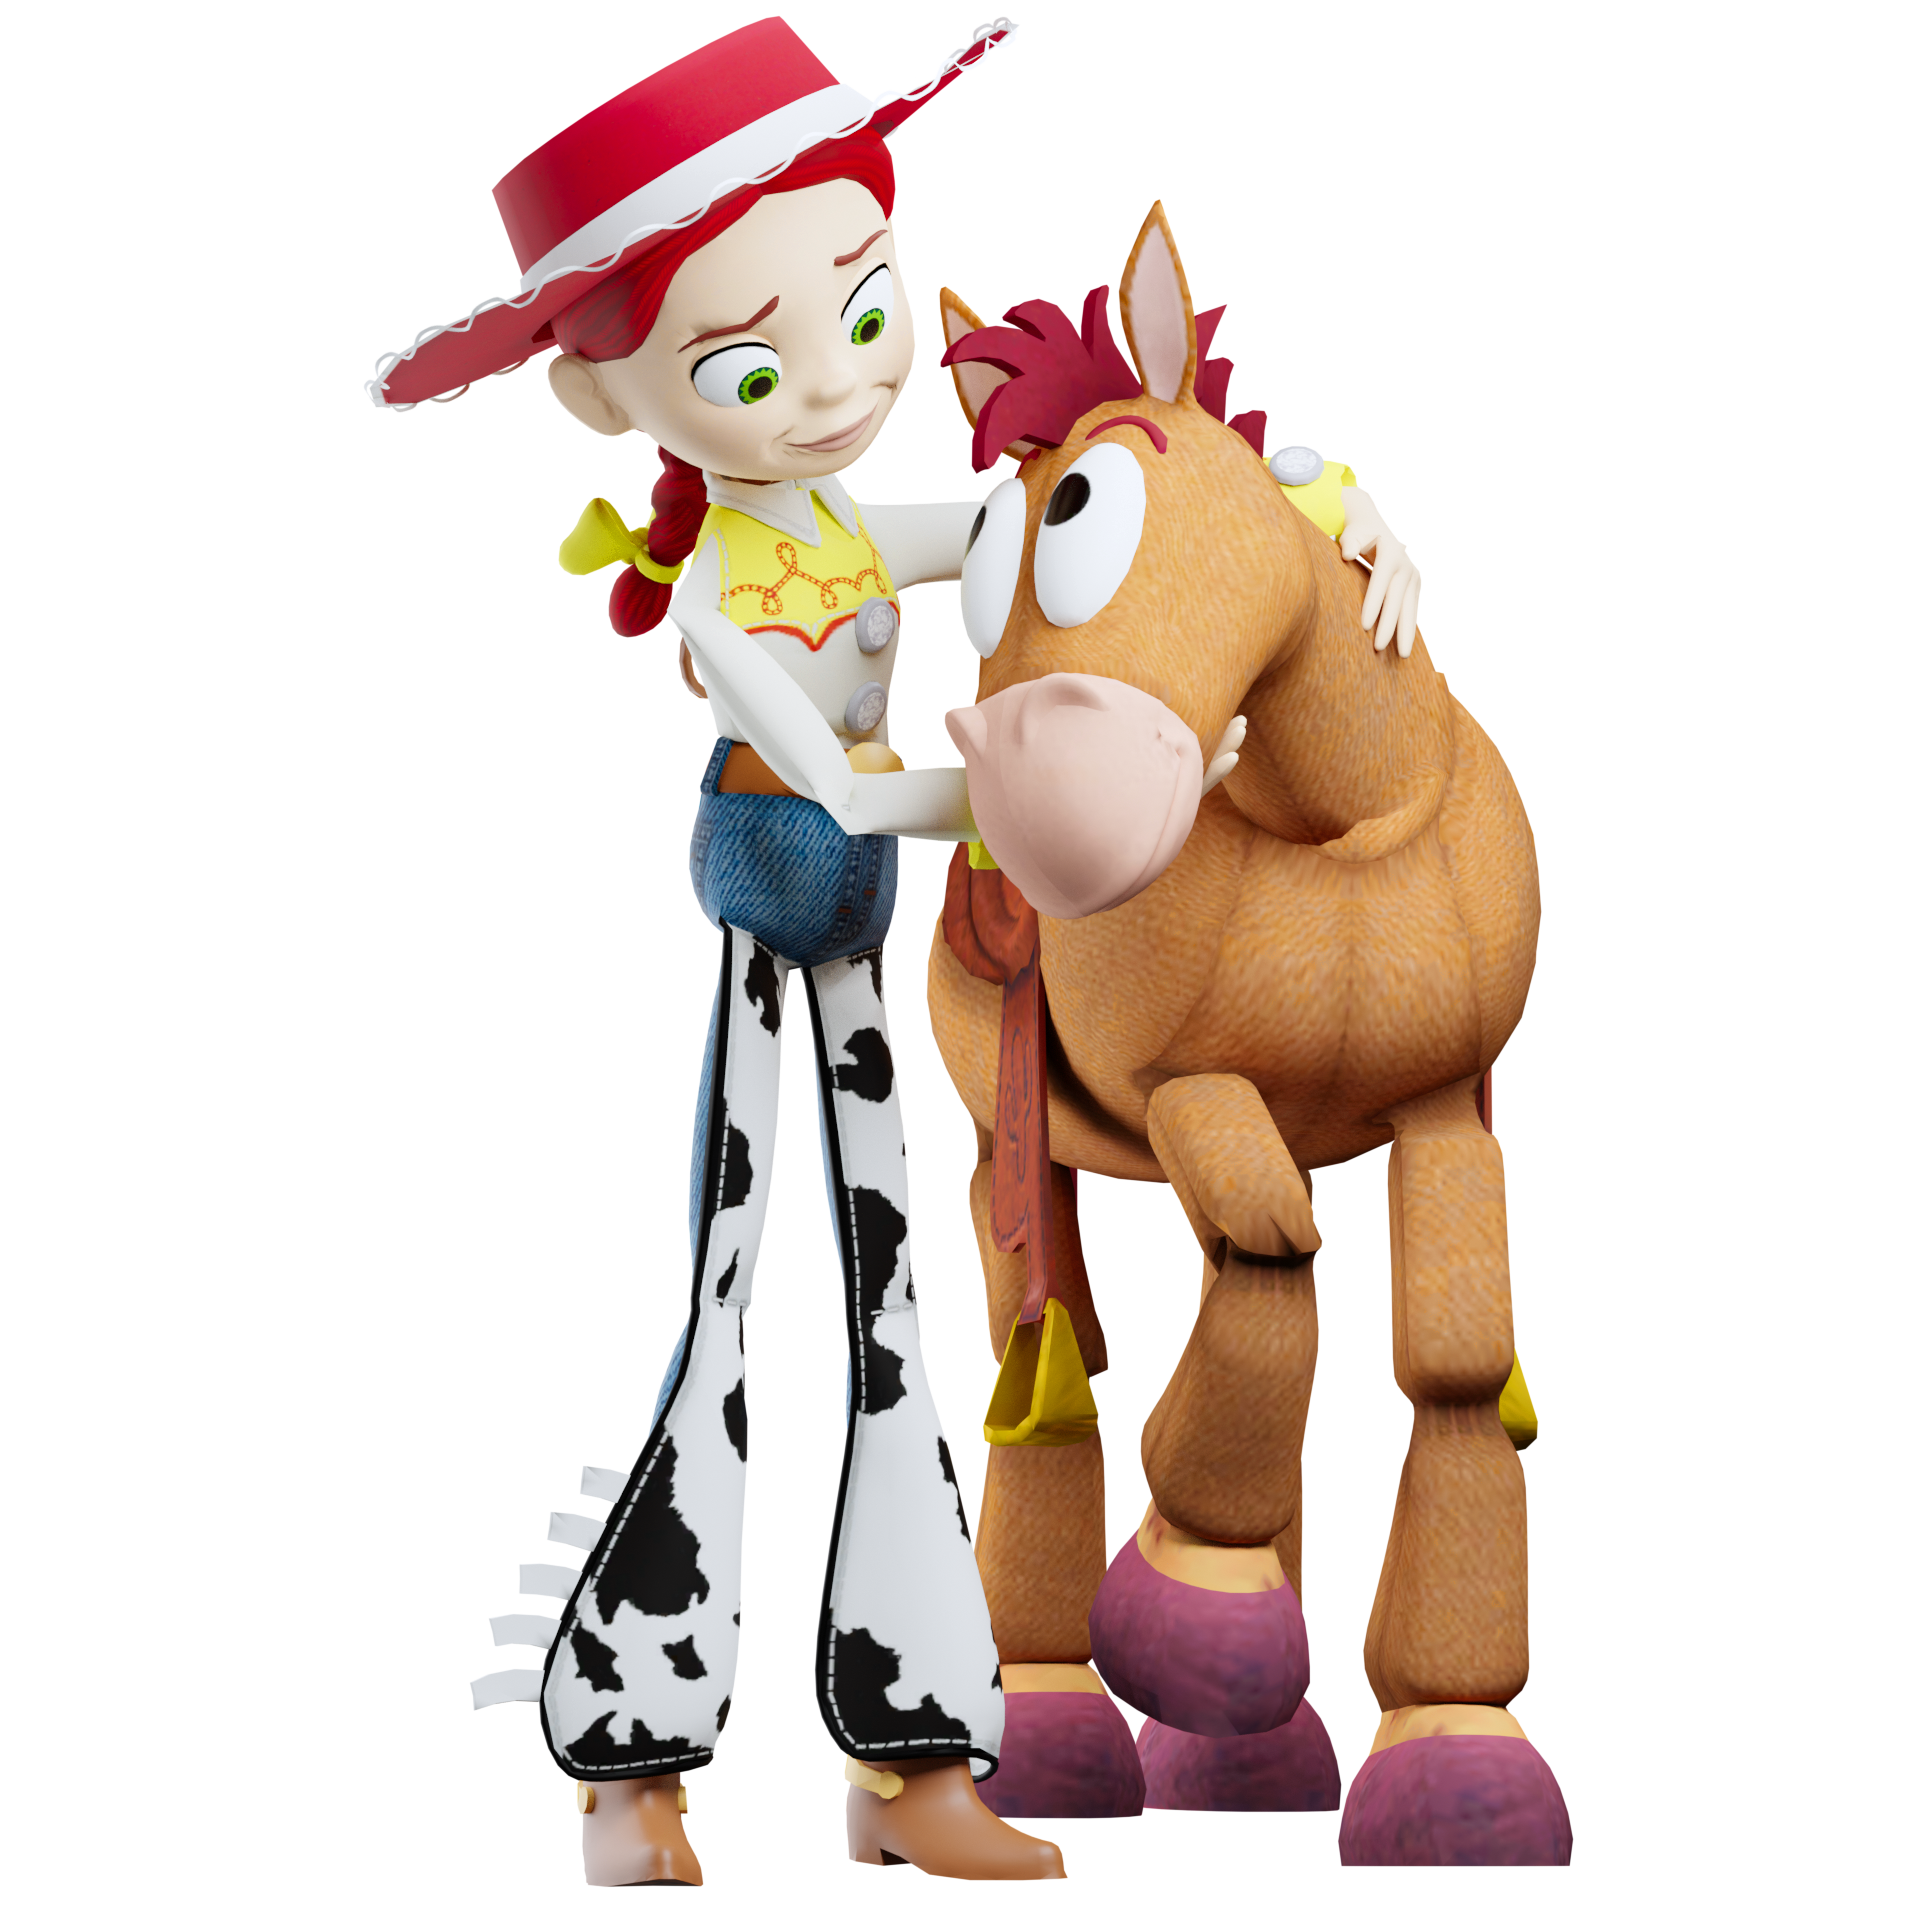 Jessie And Bullseye Toy Story 2 20th Anniversary By Spinoskingdom875 On Deviantart